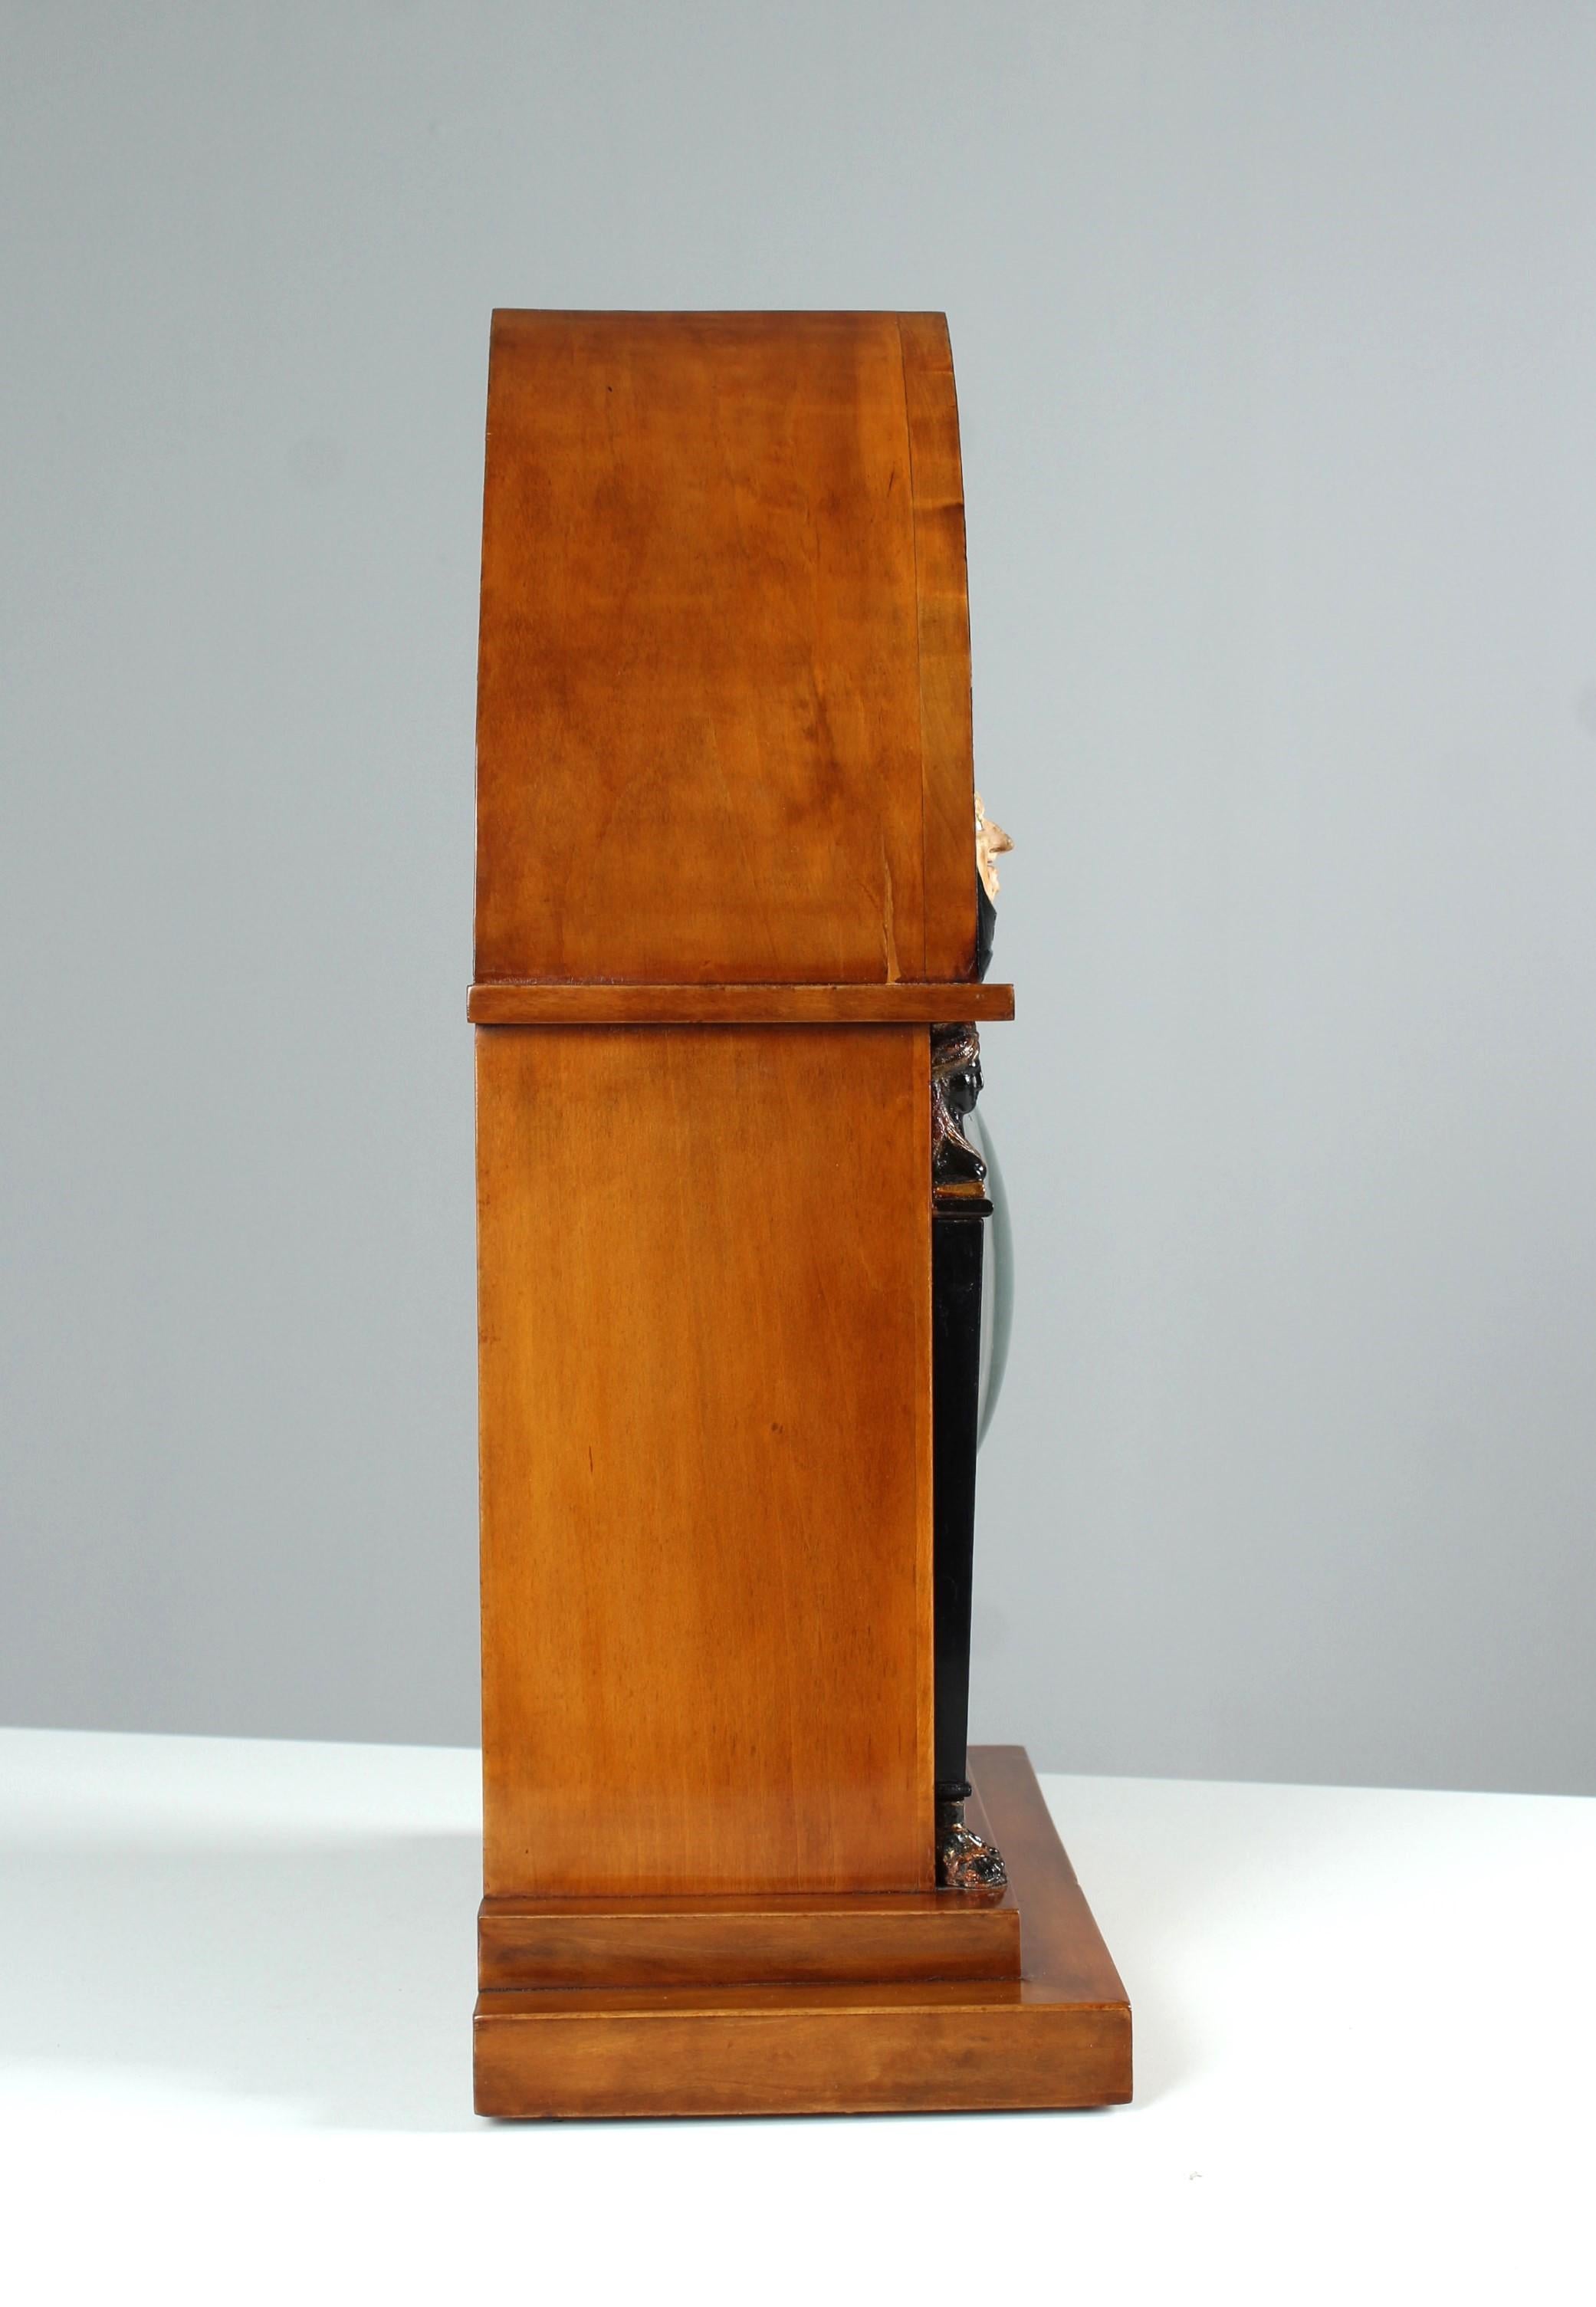 Fruitwood 19th Century Biedermeier Mantel Clock with Automated Face, circa 1820-1830